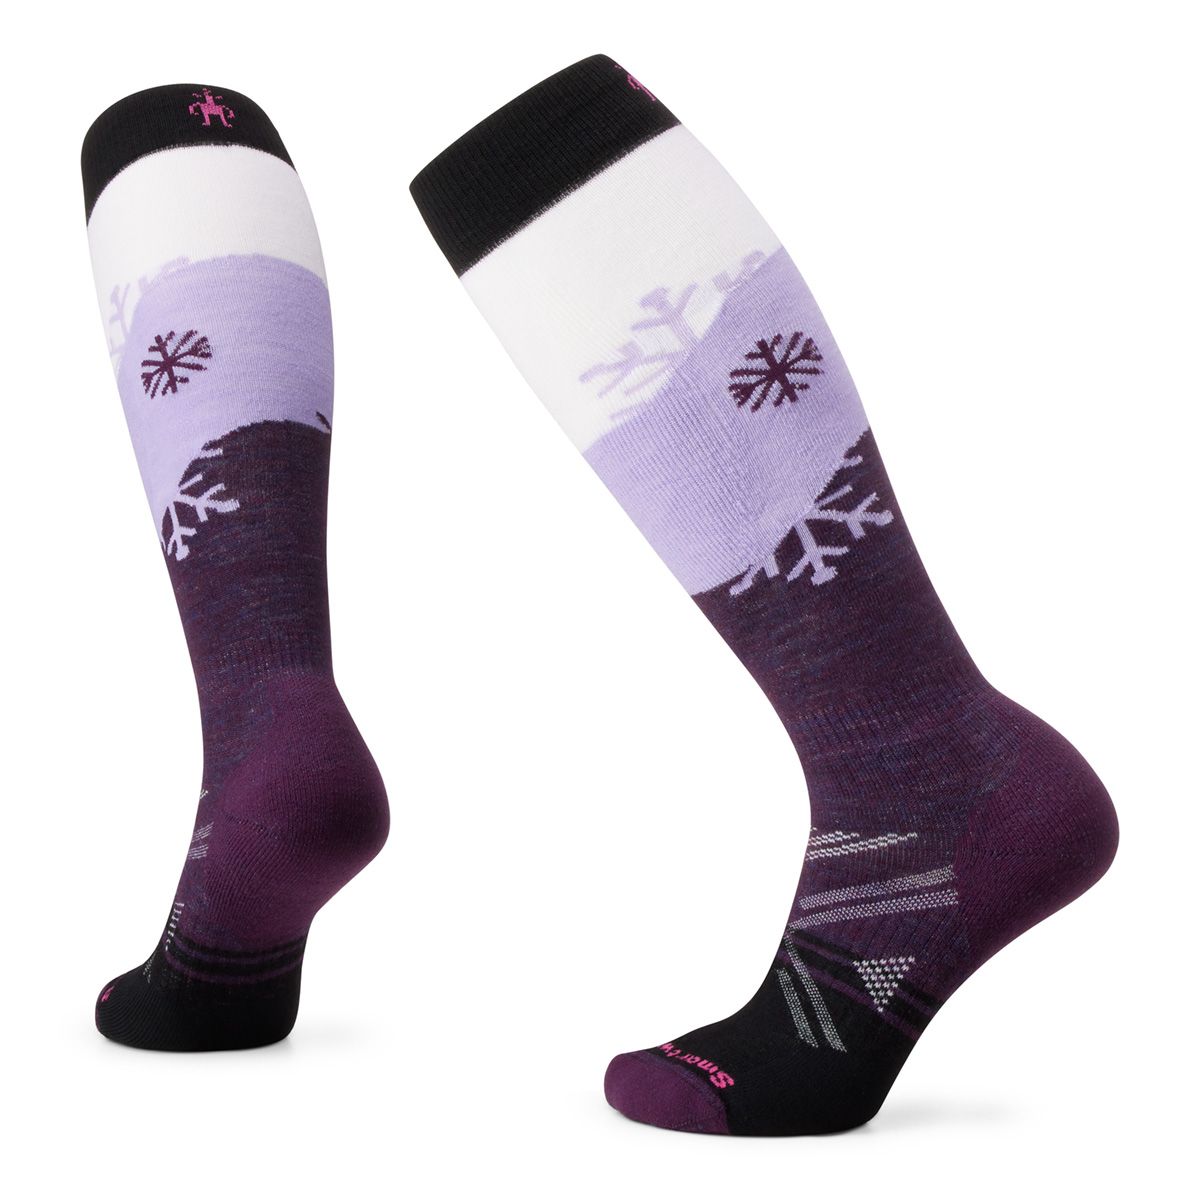  ZJLX Bare Leg Socks Autumn and Winter Artifact Color